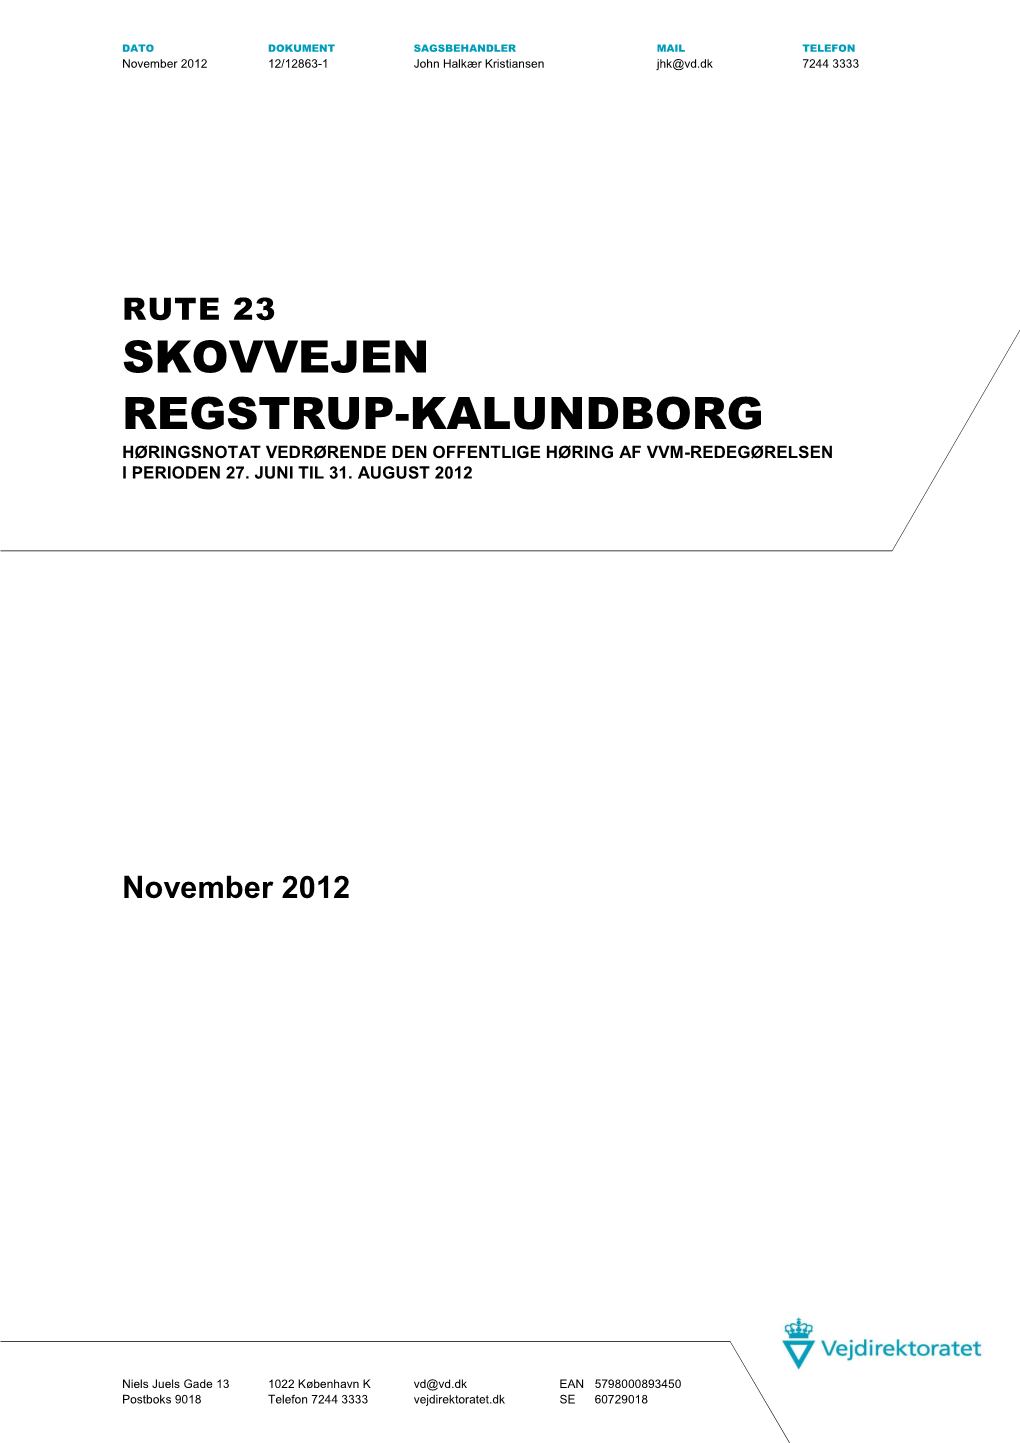 VVM Rute 23 Regstrup-Kalundborg Høringsnotat